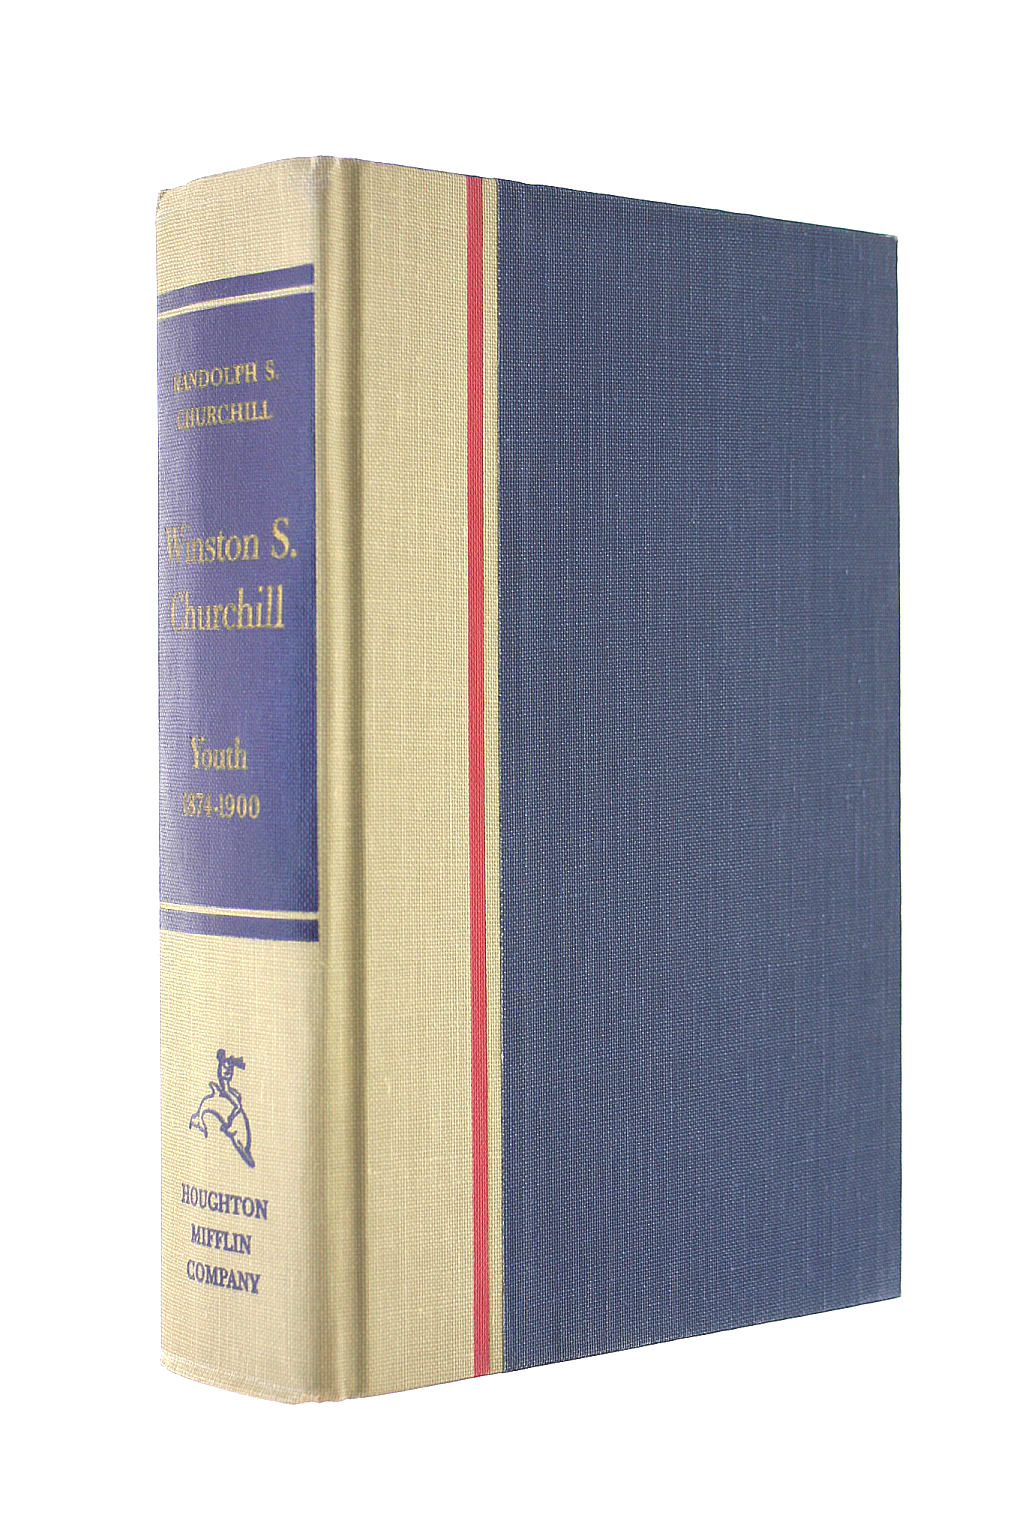 RANDOLPH S CHURCHILL - WINSTON S CHURCHILL VOLUME 1 YOUTH 1874-1900